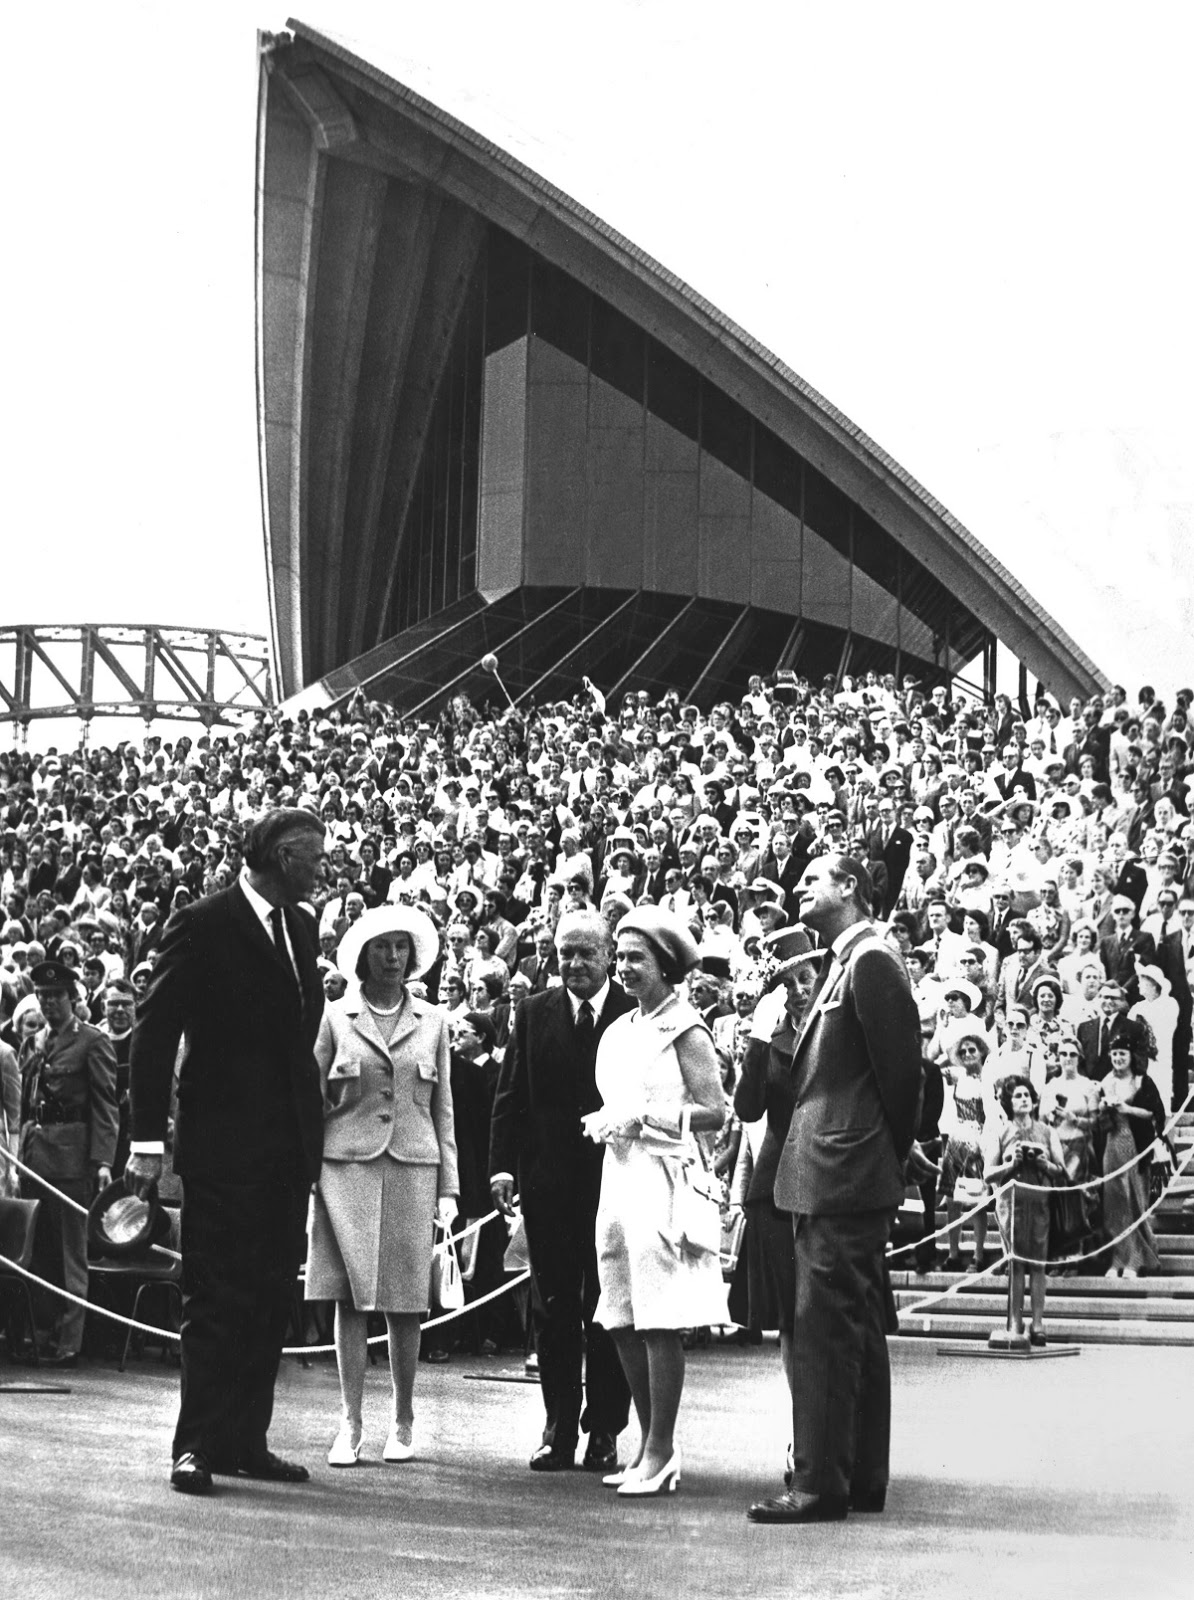 Queen Elizabeth II attending the opening ceremony. Photo: vintage